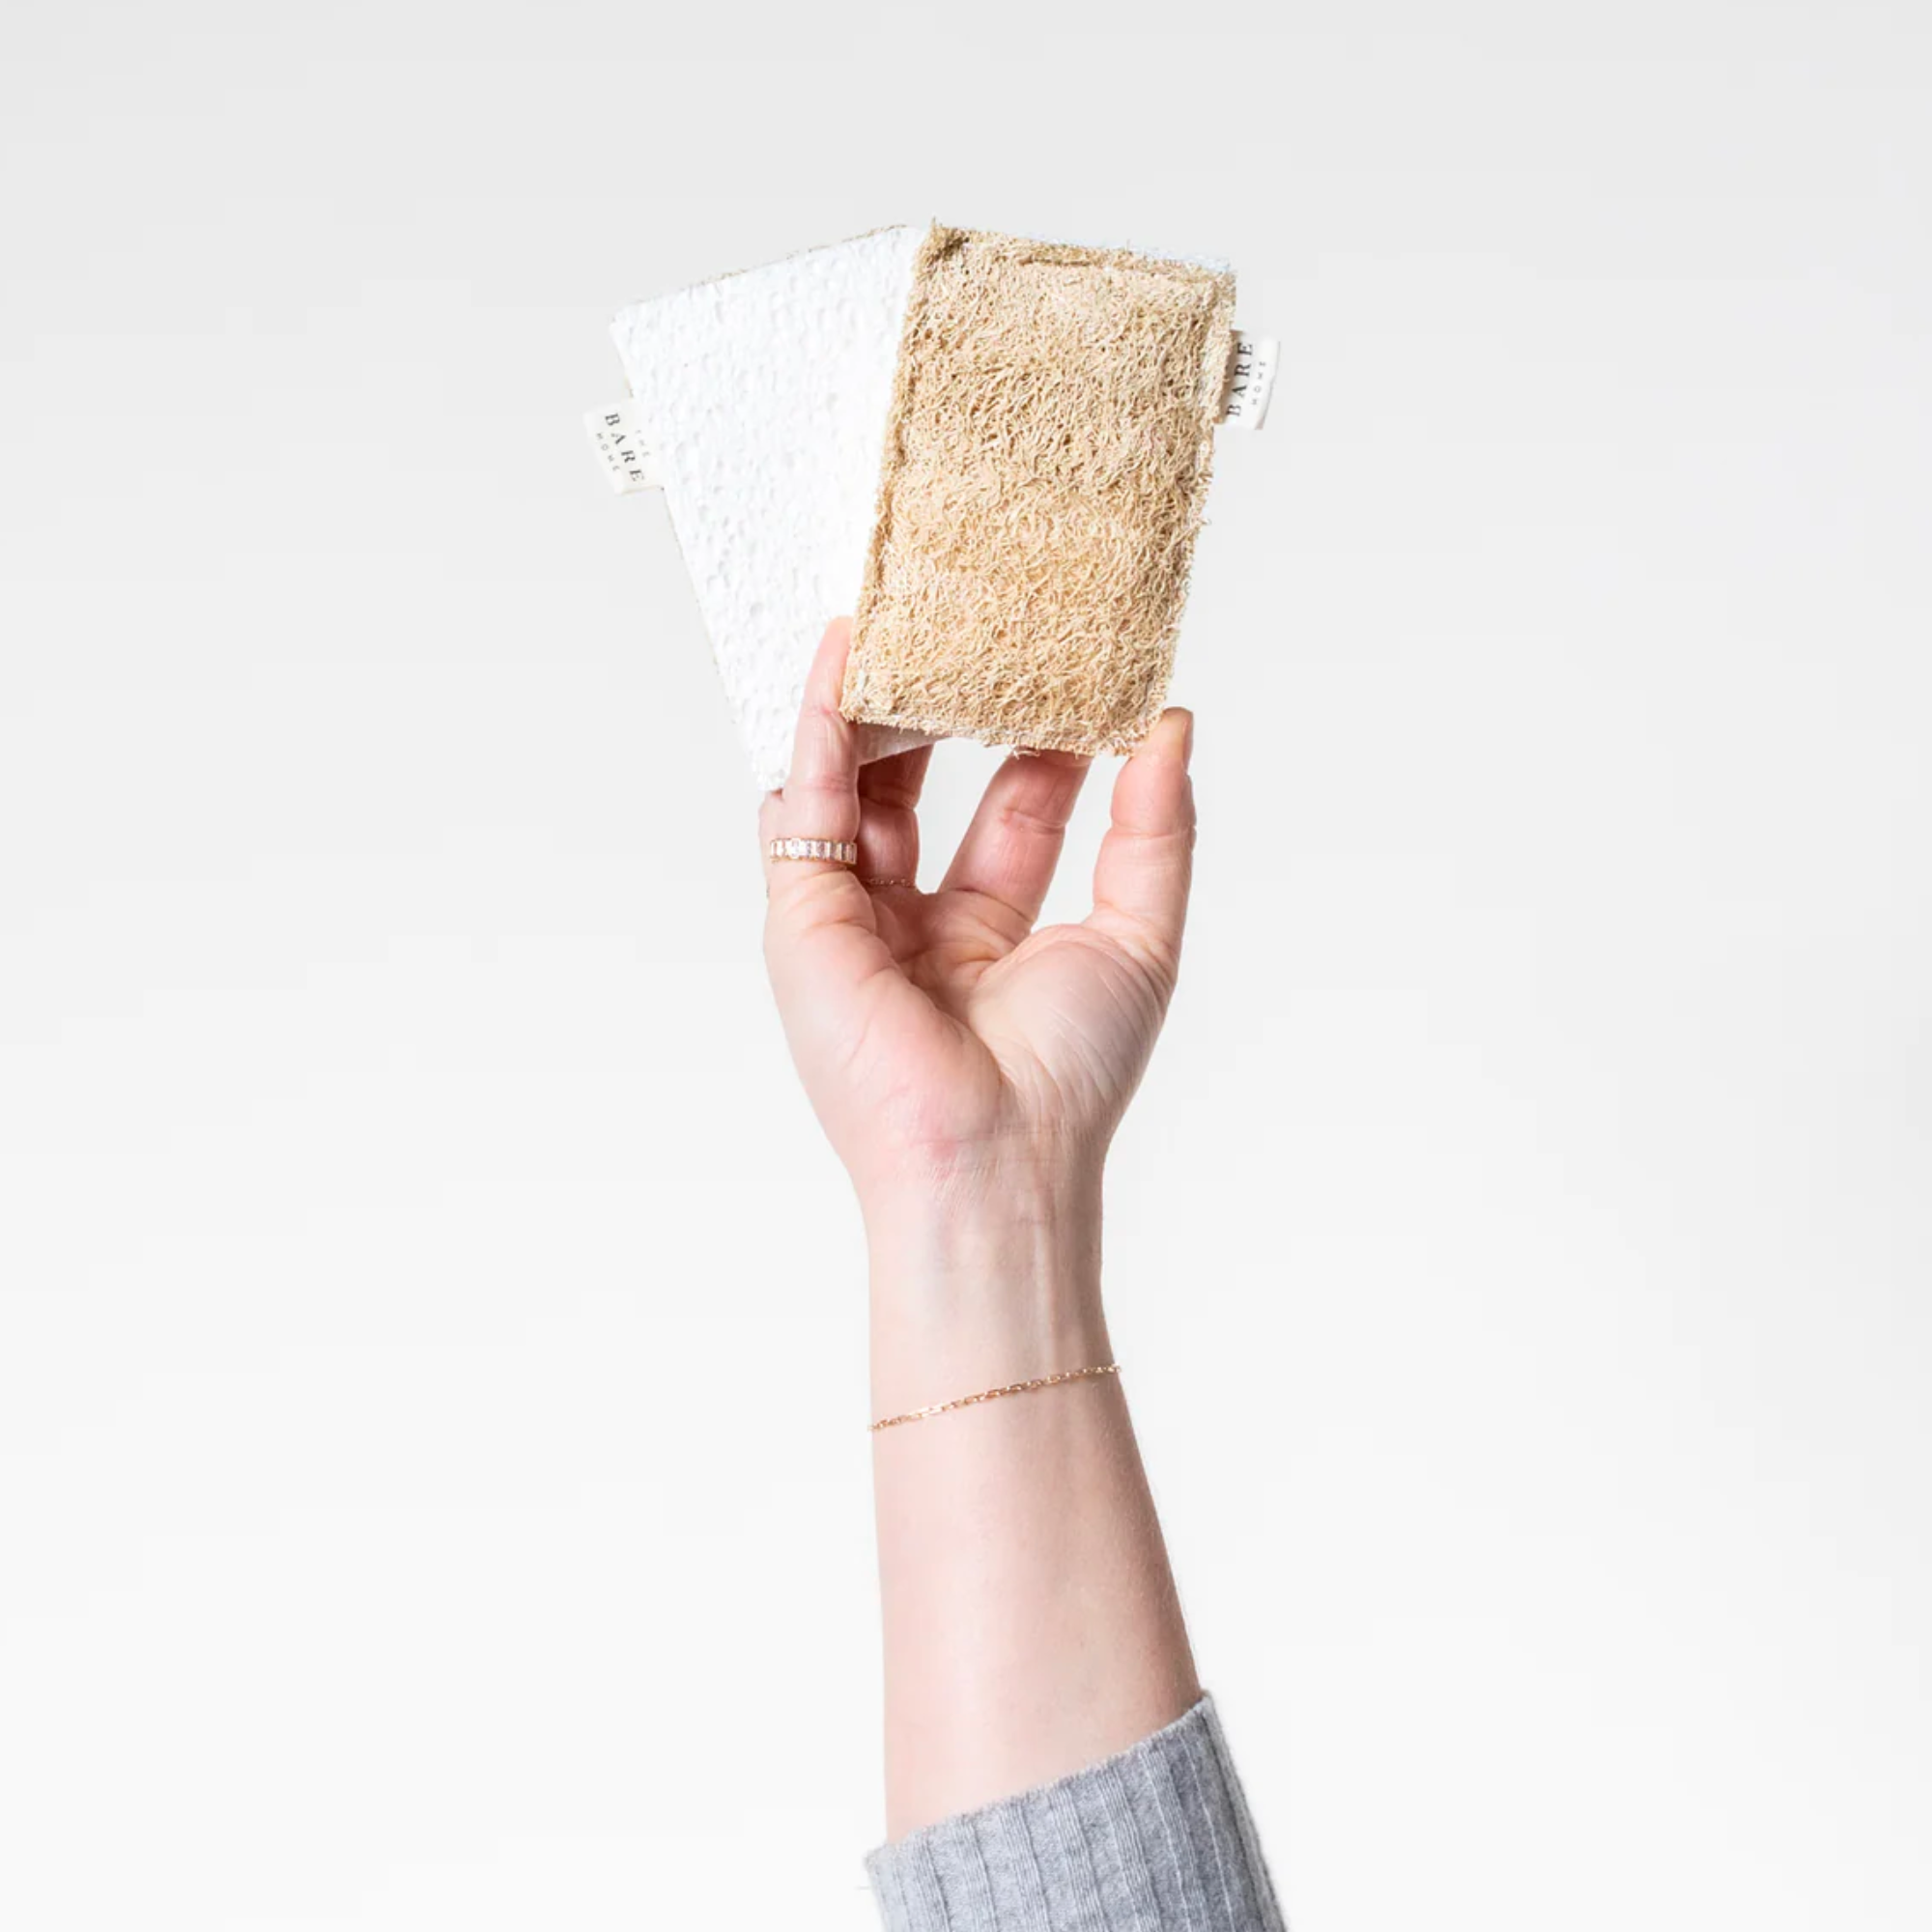 The Bare Home Cellulose + Loofah Sponge